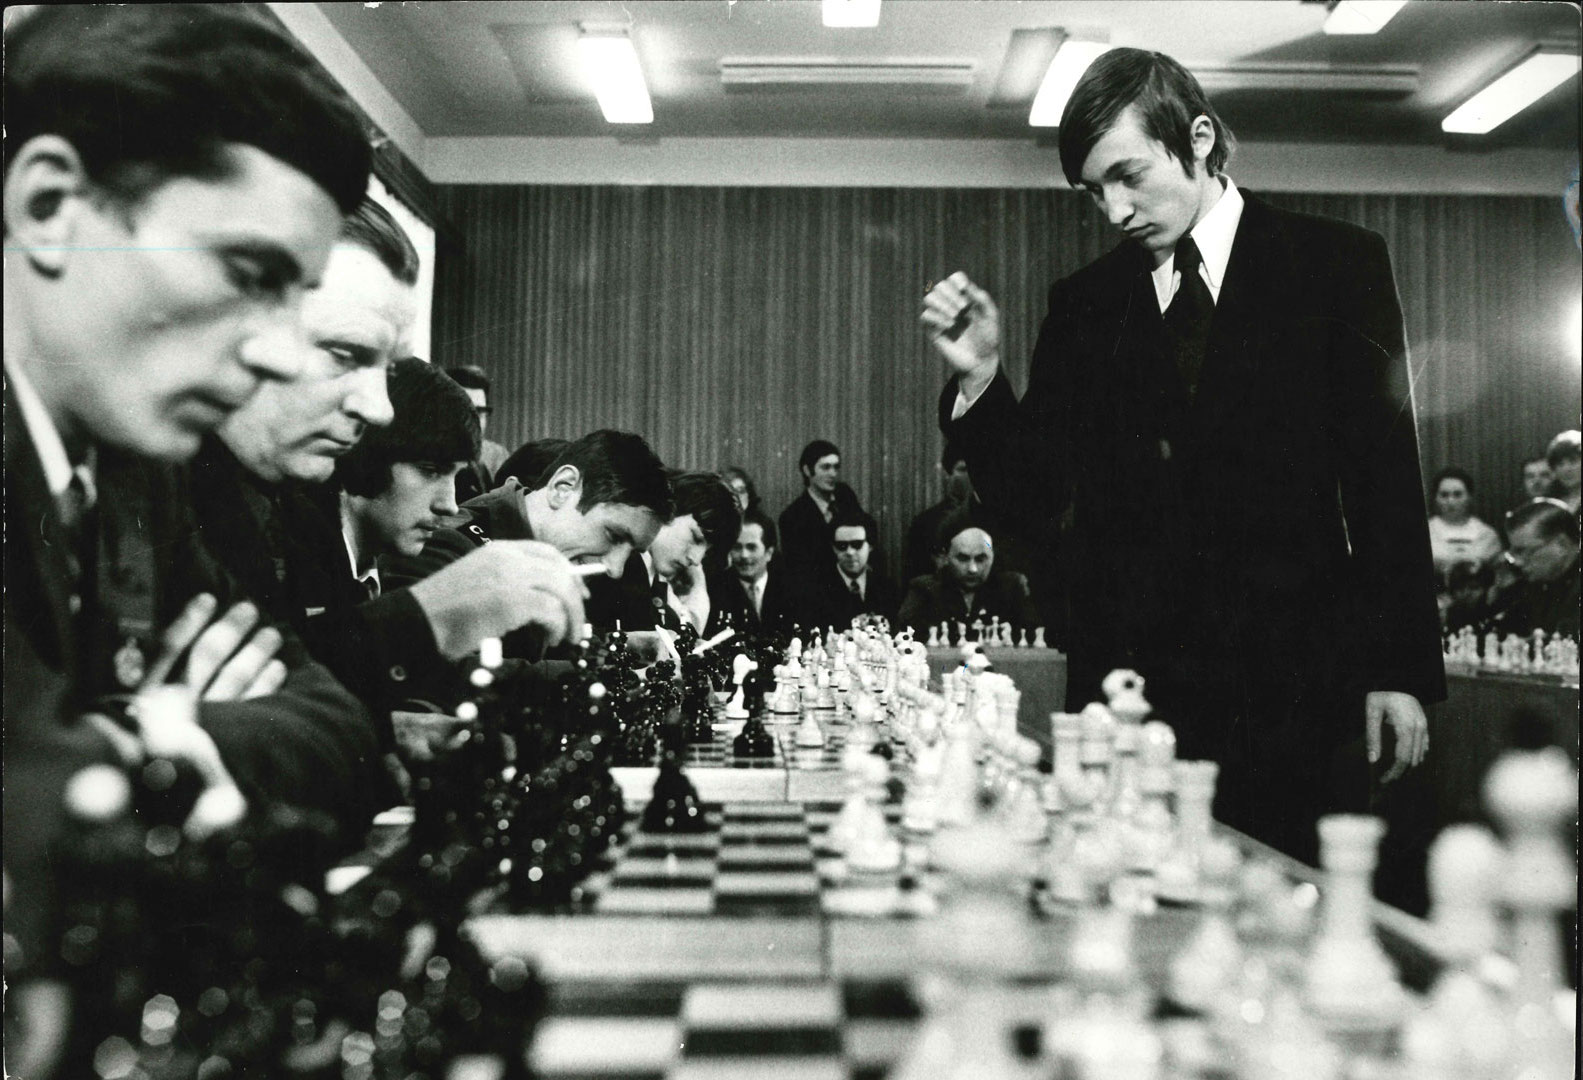 Anatoly Karpov - The Making of a Champion - Kenya Chess Masala